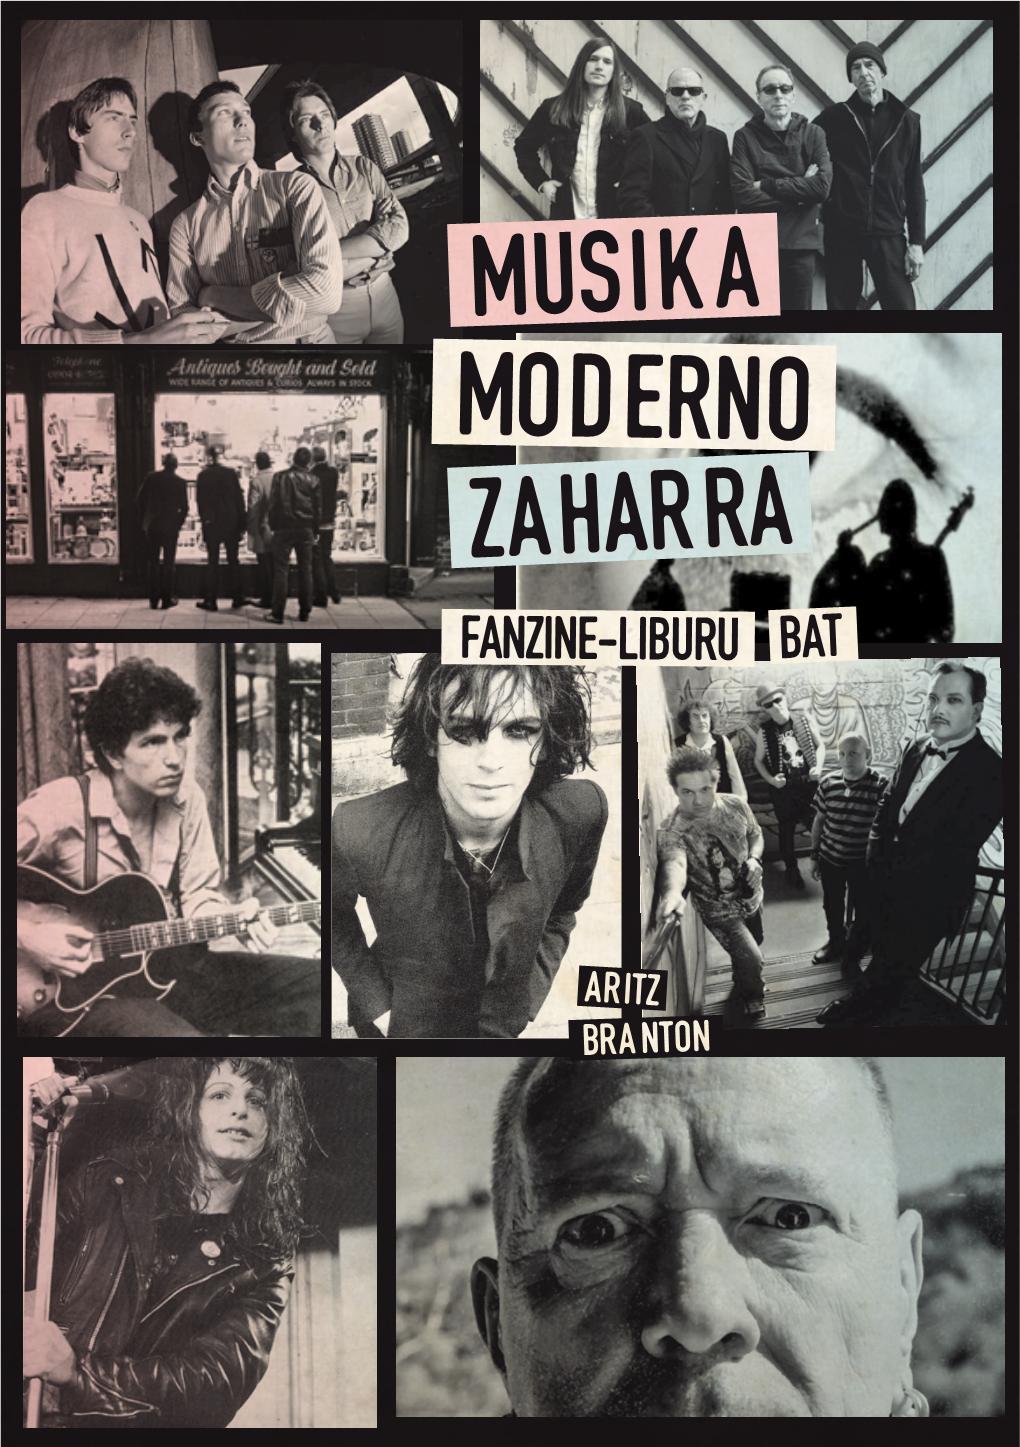 Musika Moderno Zaharra Fanzine-Liburu Bat